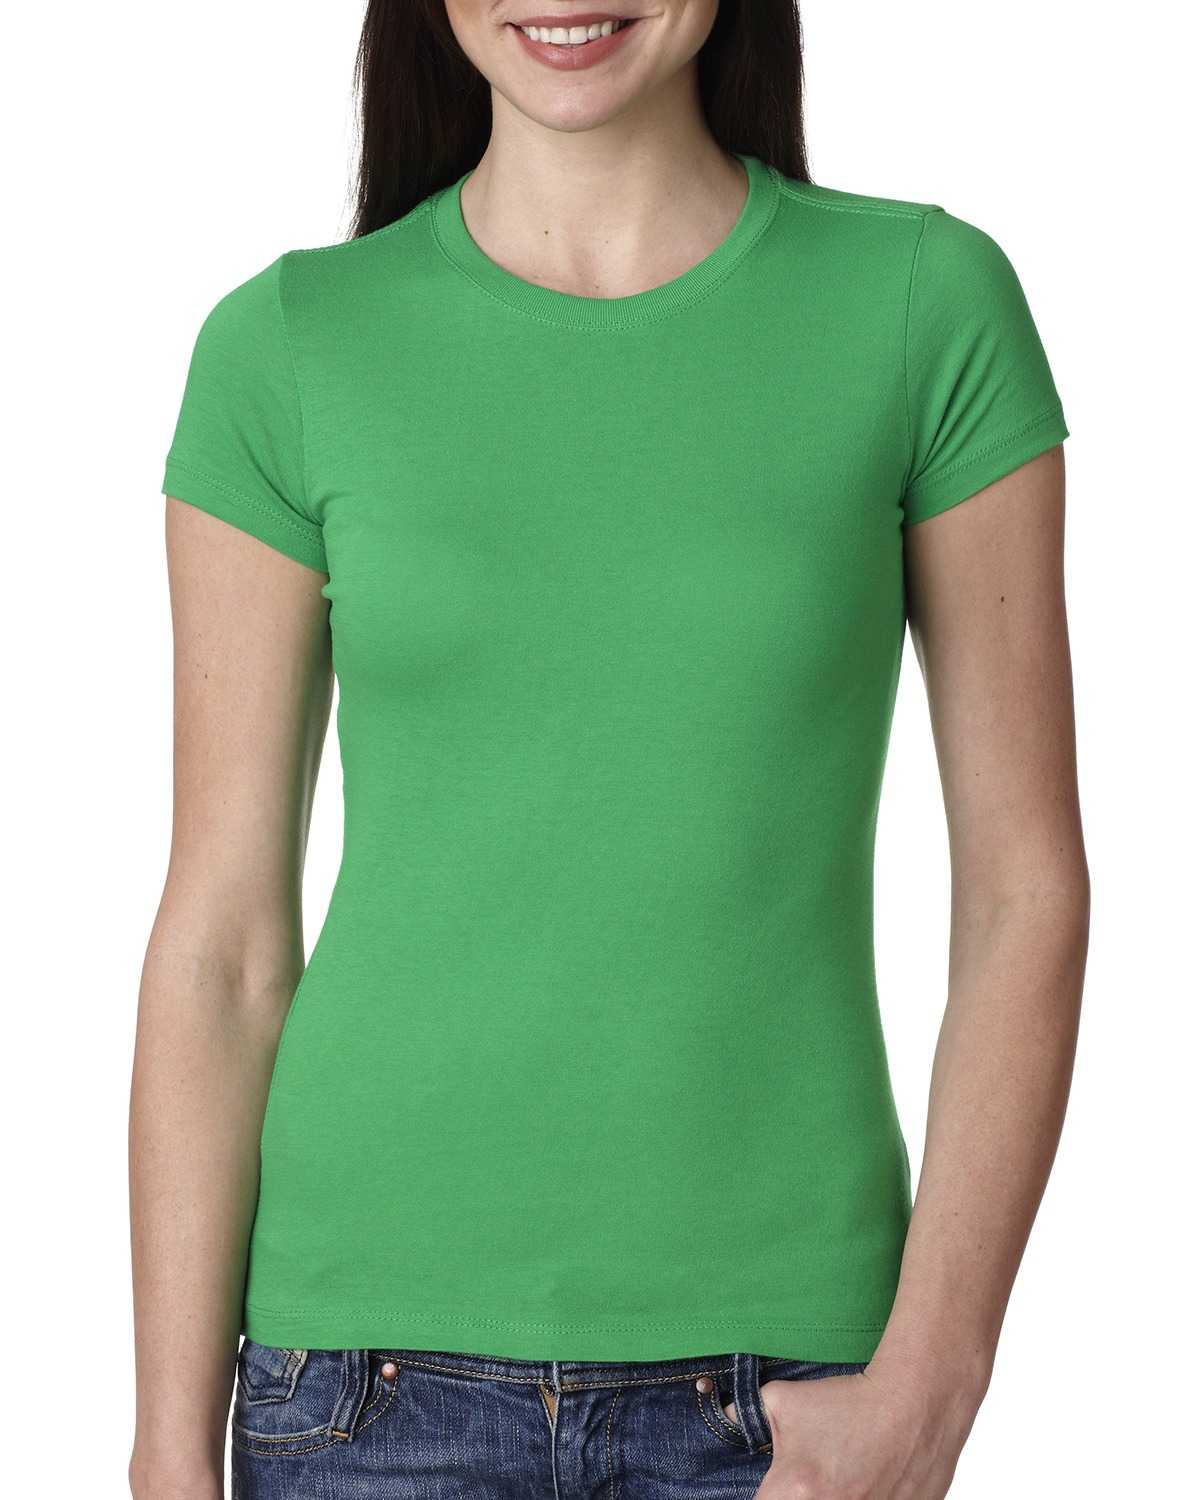 Next Level 3300L Ladies' Perfect T-Shirt | ApparelChoice.com